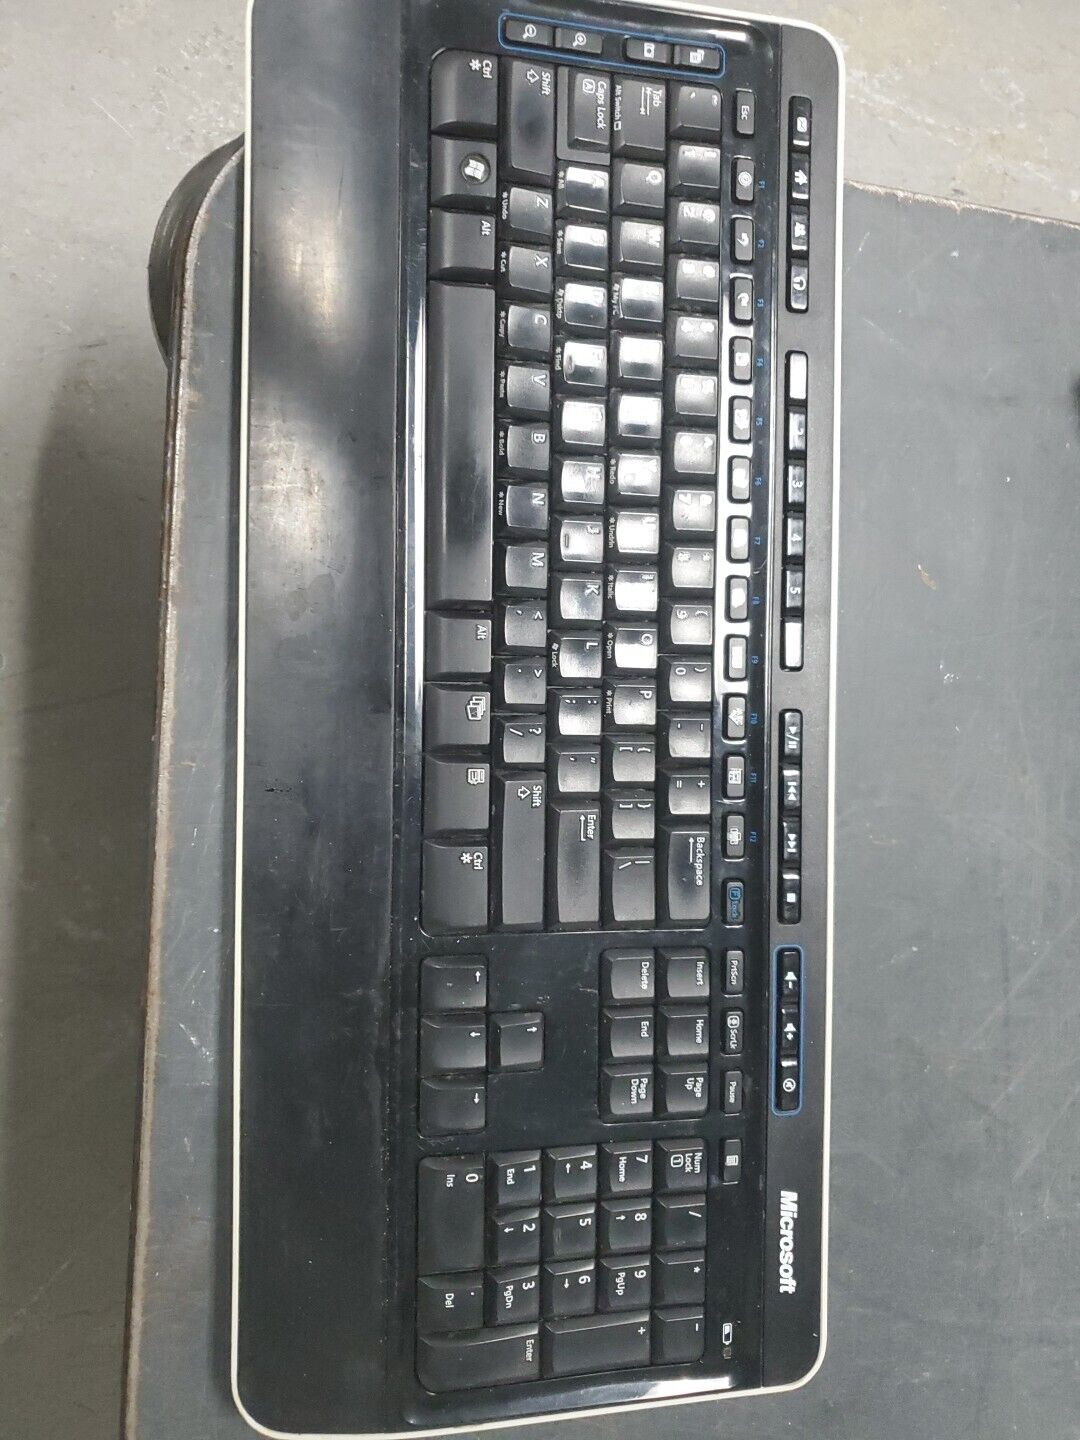 Vintage Microsoft Wireless Keyboard 3000 V2.0 With USB Receiver 